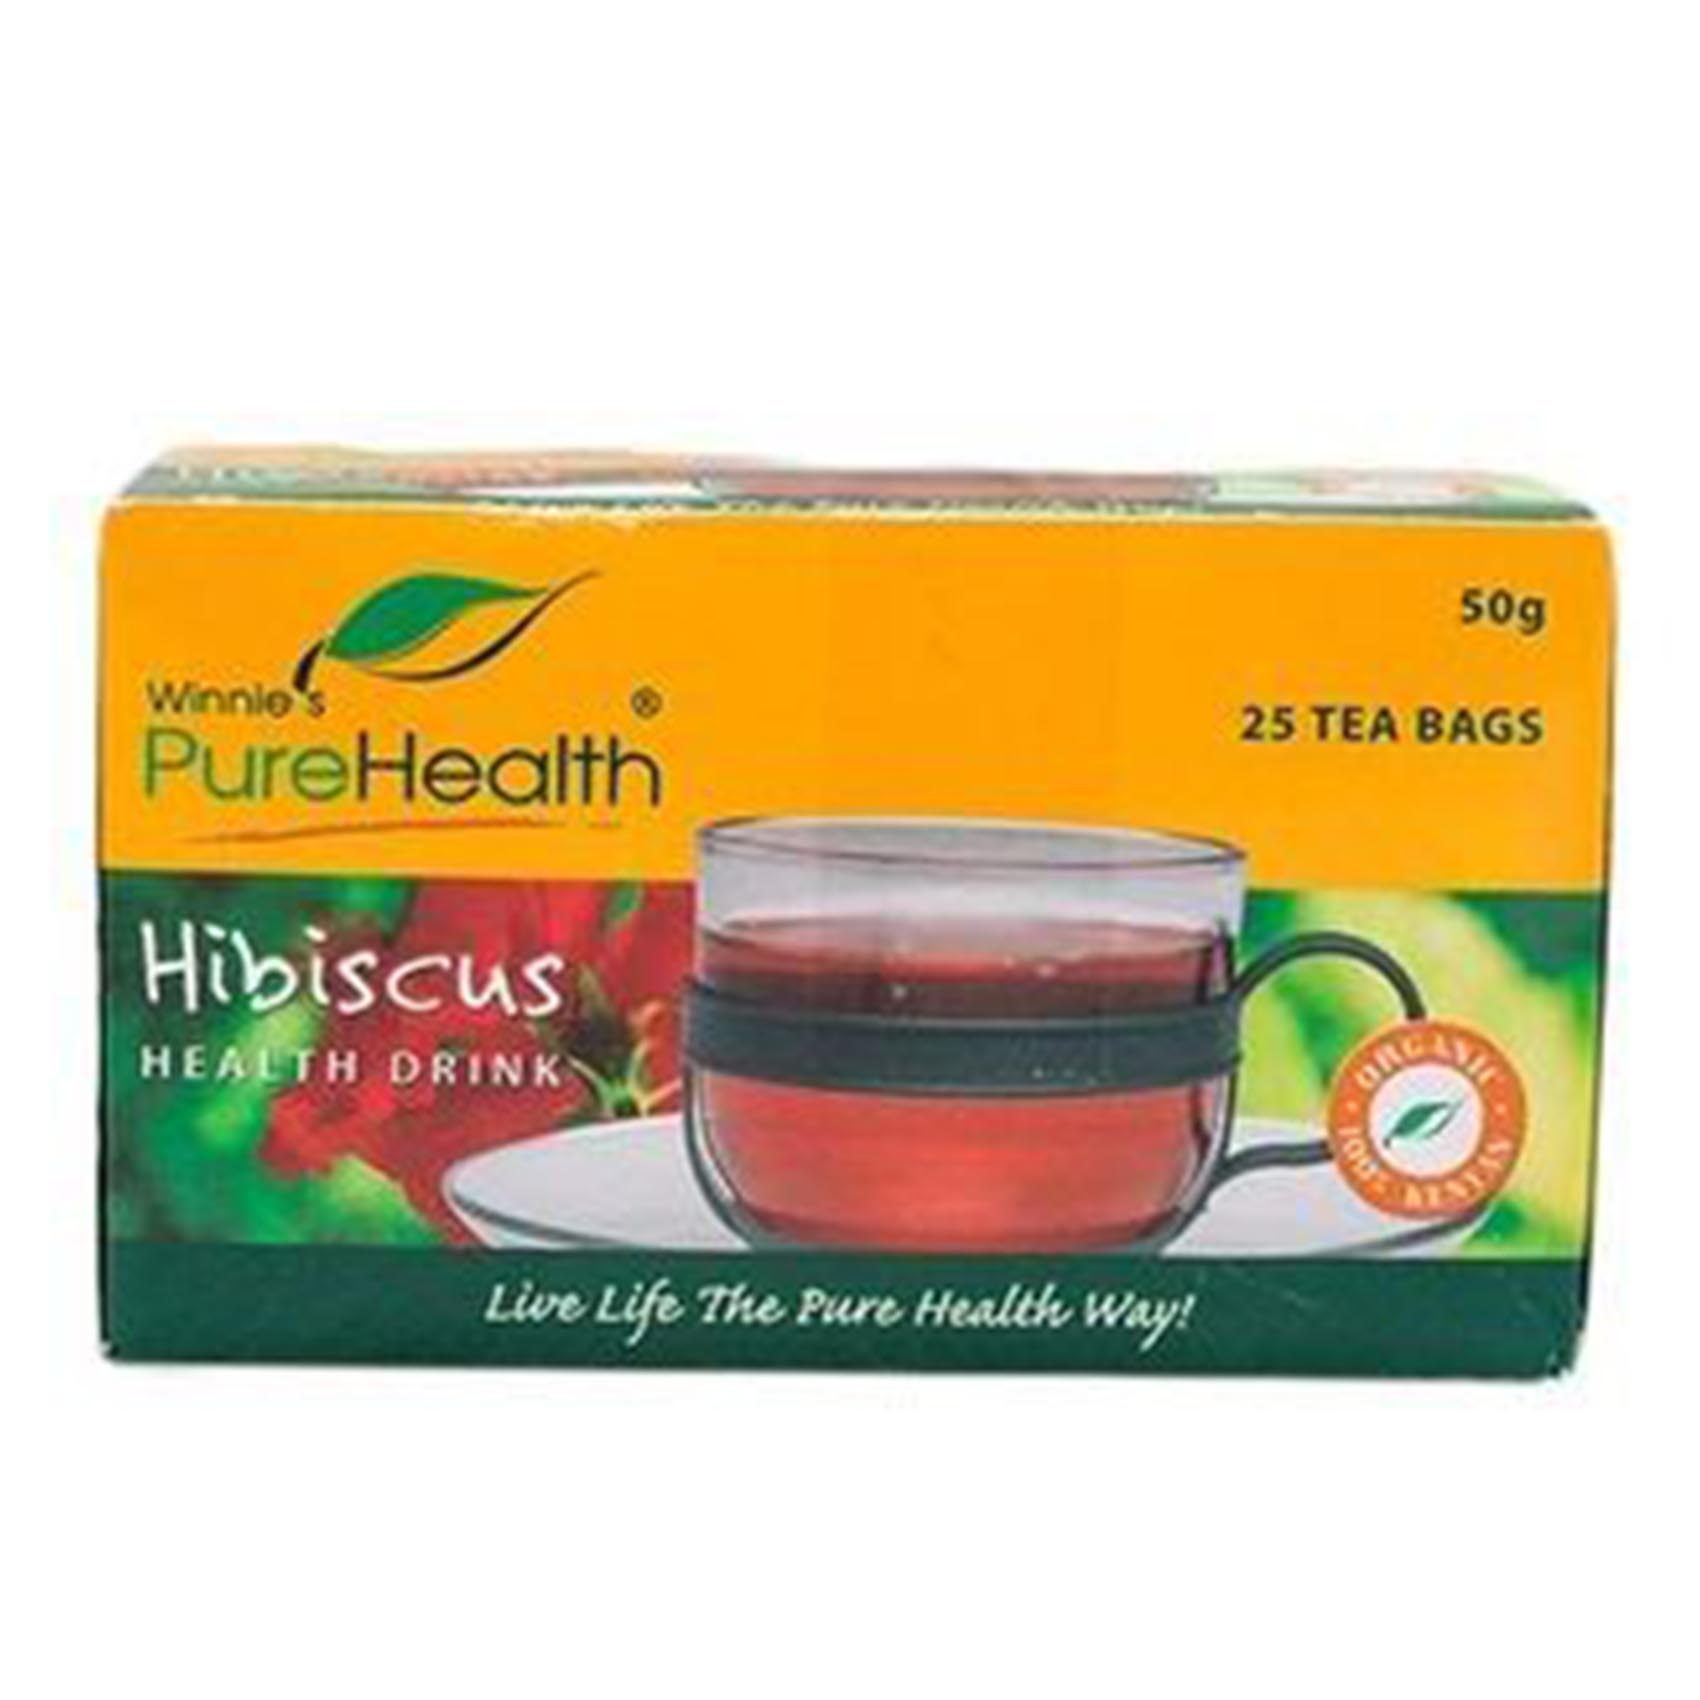 Wnnies Pure Health Hibiscus Tea Bag  50g